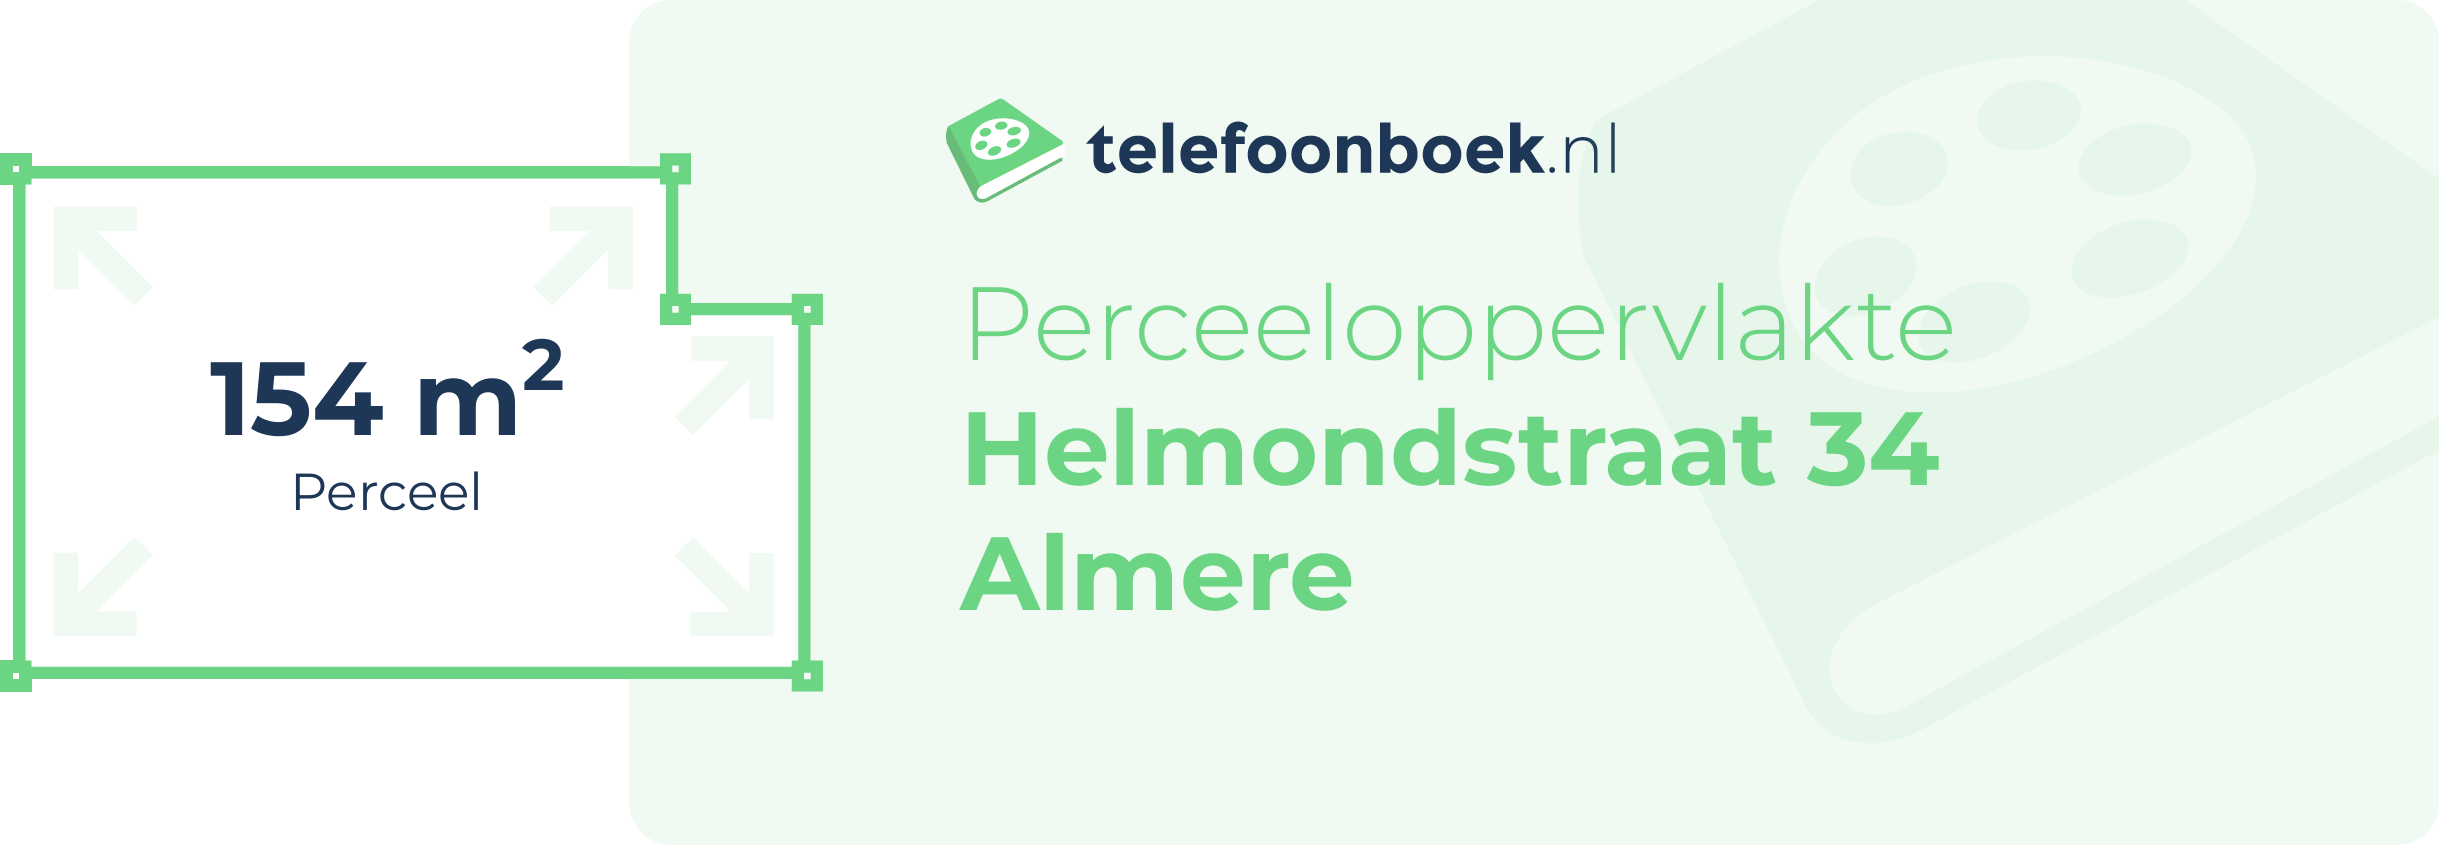 Perceeloppervlakte Helmondstraat 34 Almere